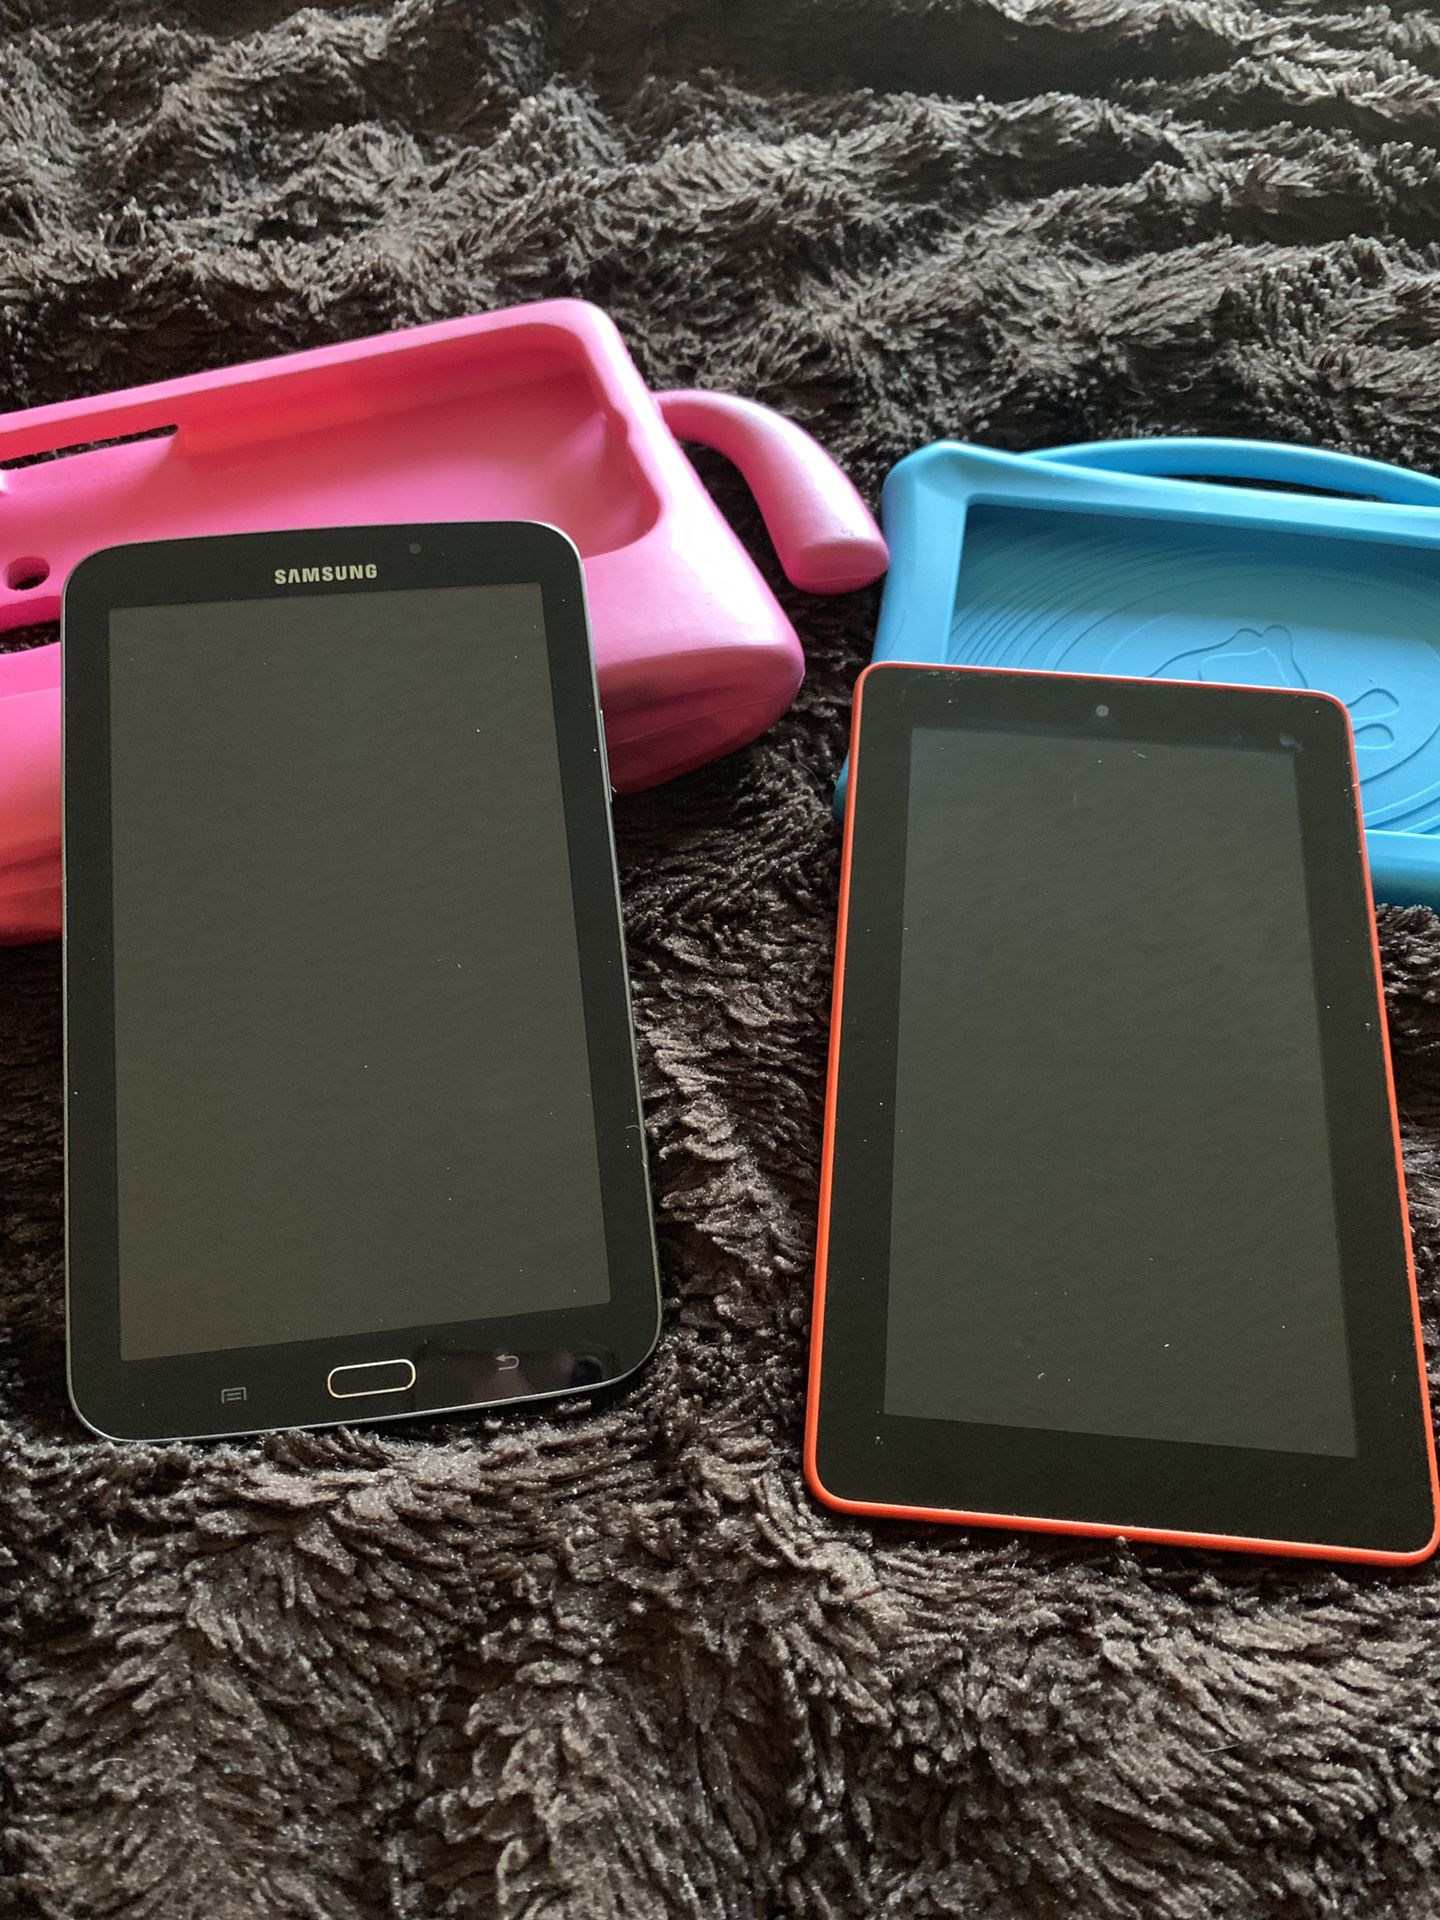 Samsung Galaxy Tab & Kindle Fire tablets